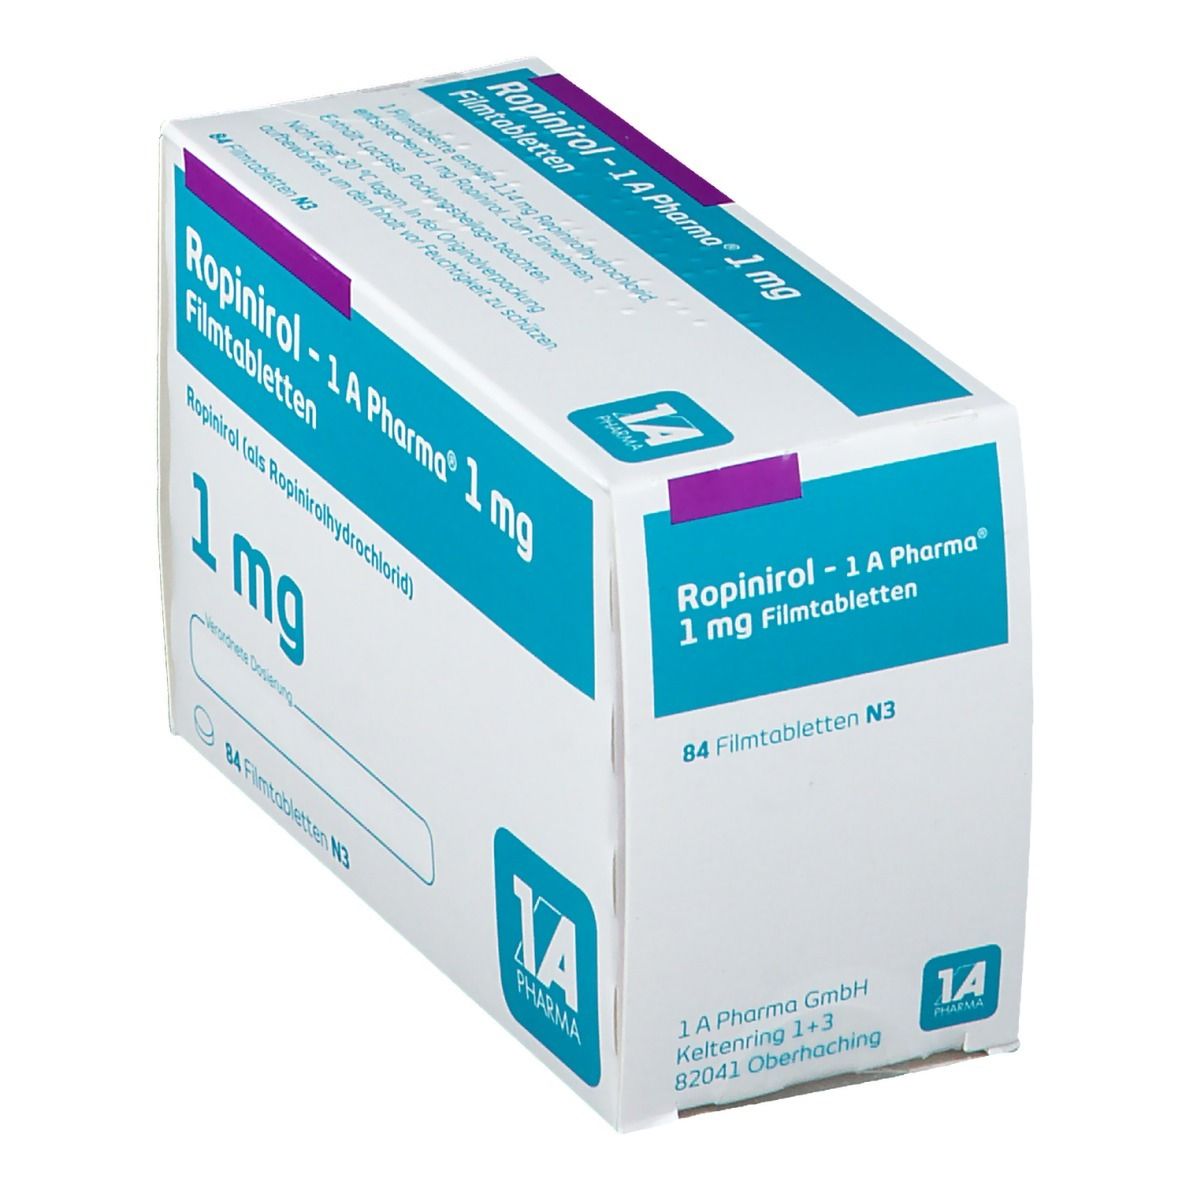 Ropinirol 1A Pharma® 1Mg